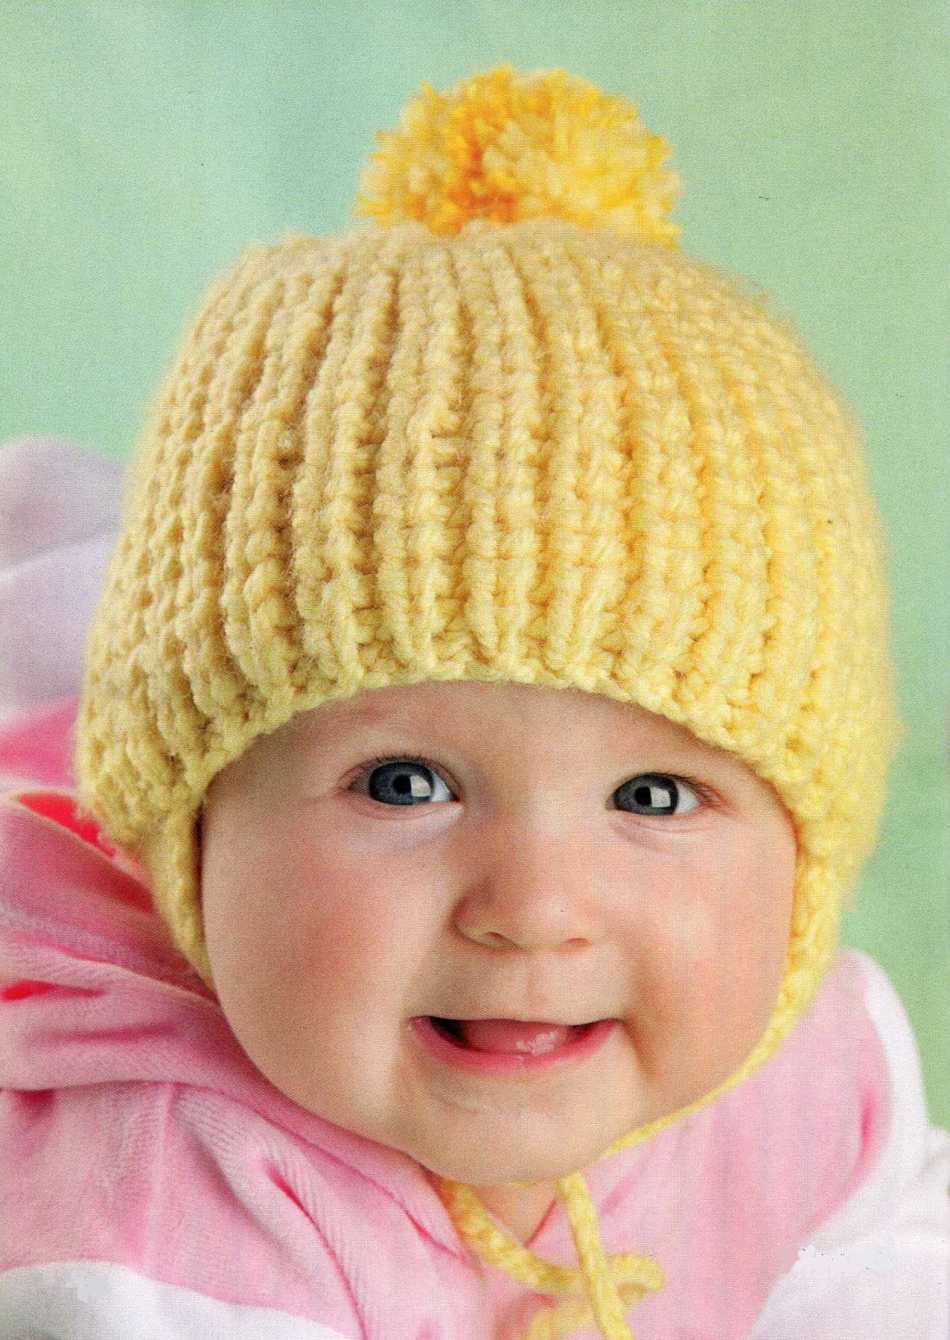 Теплая желтая вязаная шапка на девочке